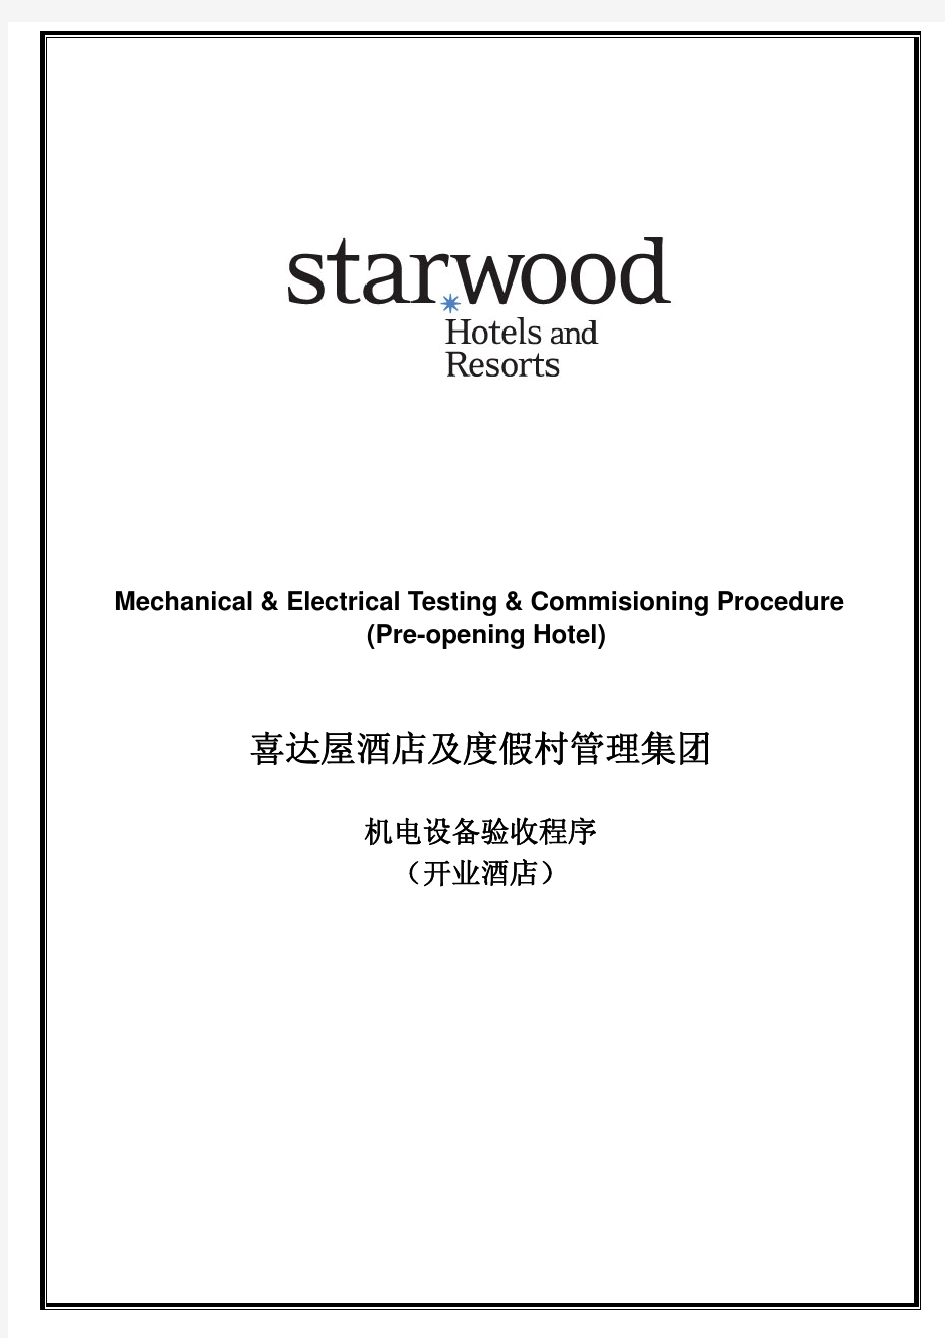 Starwood Engineering Pre-Opening T&C Manual 工程部酒店工程验收手册 2011